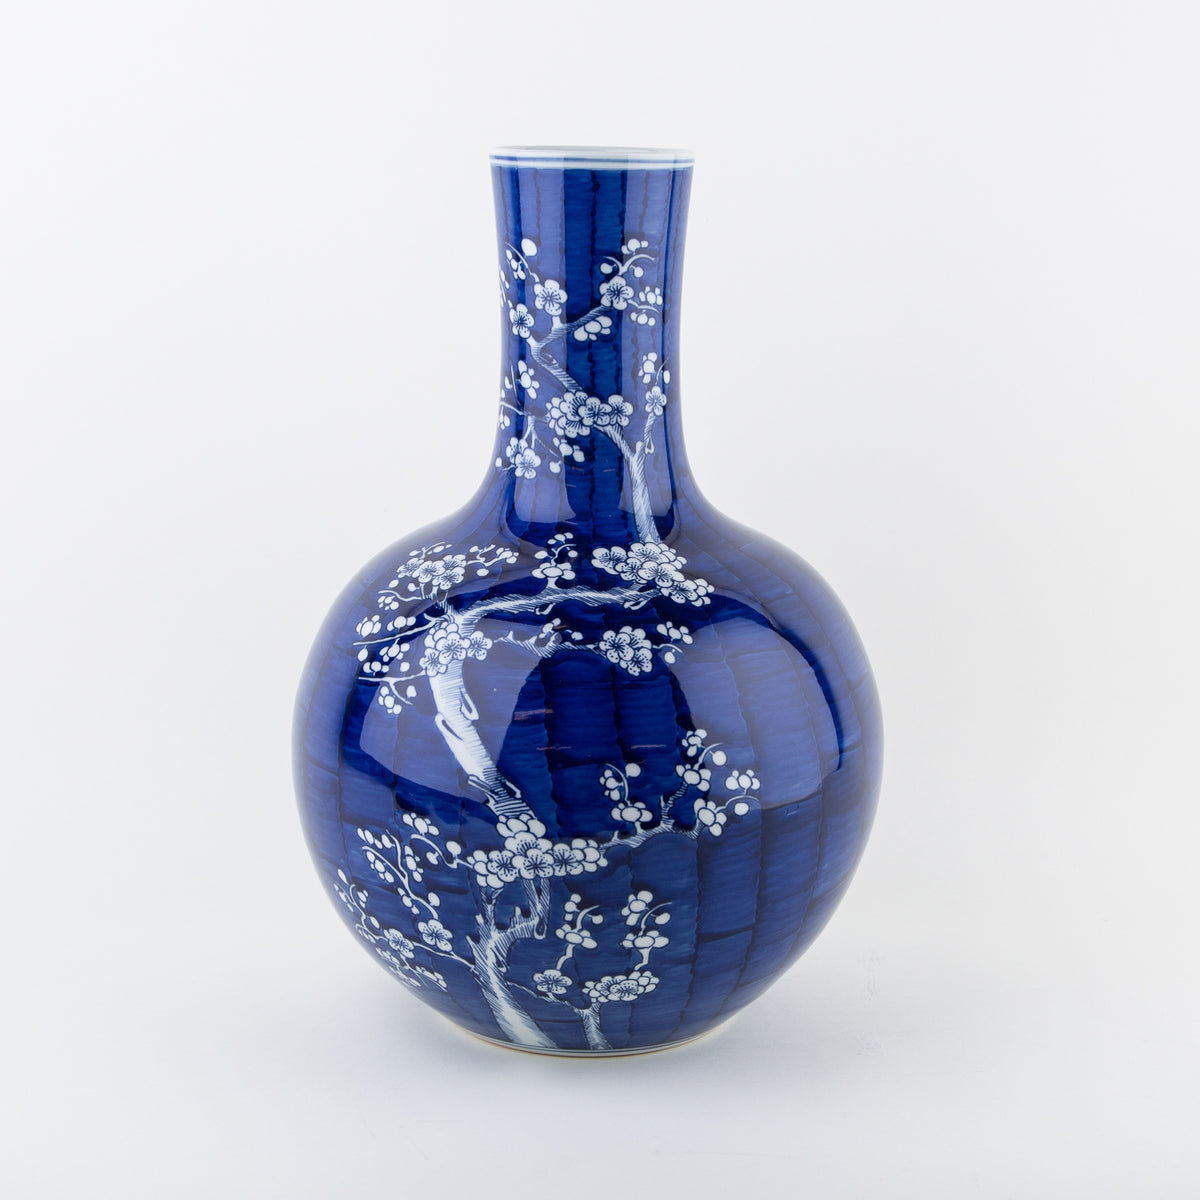 decorative vase in cherry blossom, navy blue by Pols Potten at Secret Location